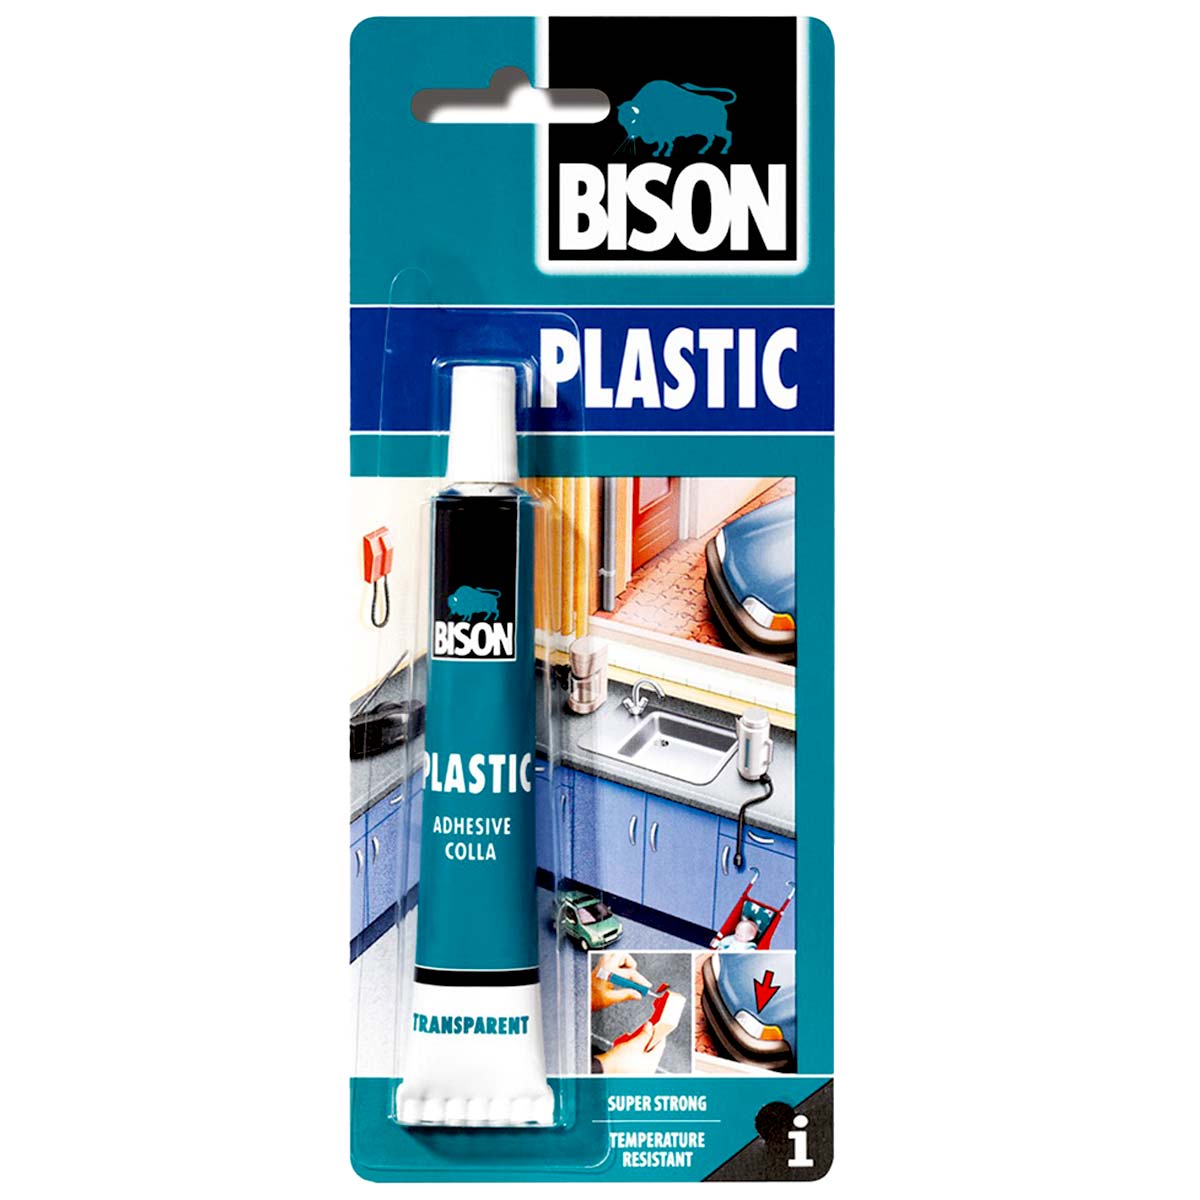 چسب پلاستیک بایسون BISON